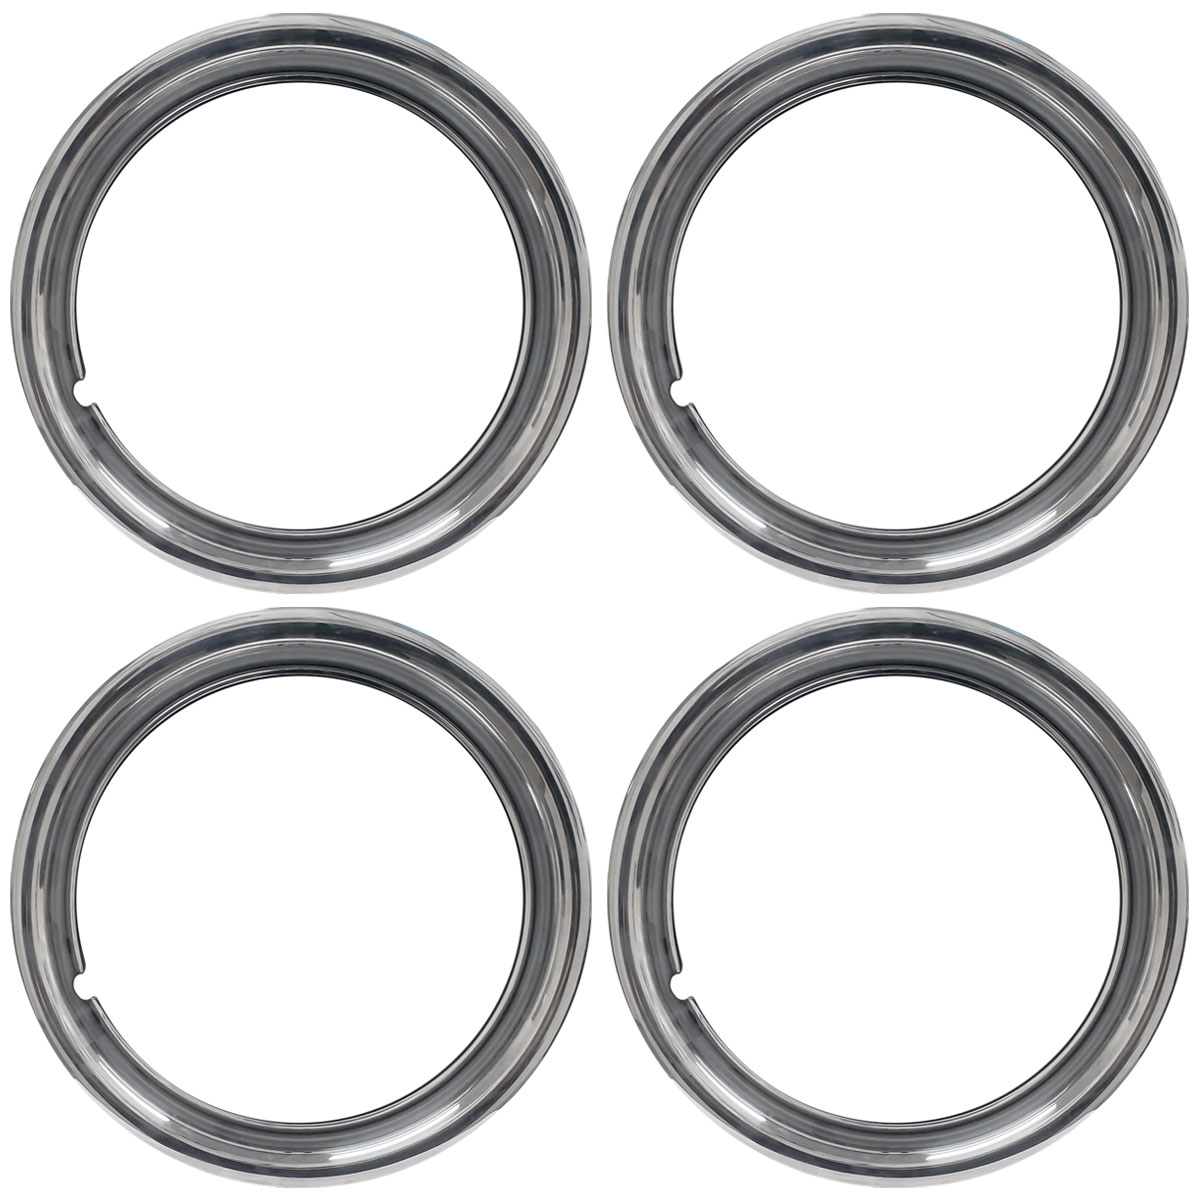 Trim Rings - Stainless Steel - 4 Pieces - fits 15" Stock Steel VW Wheels